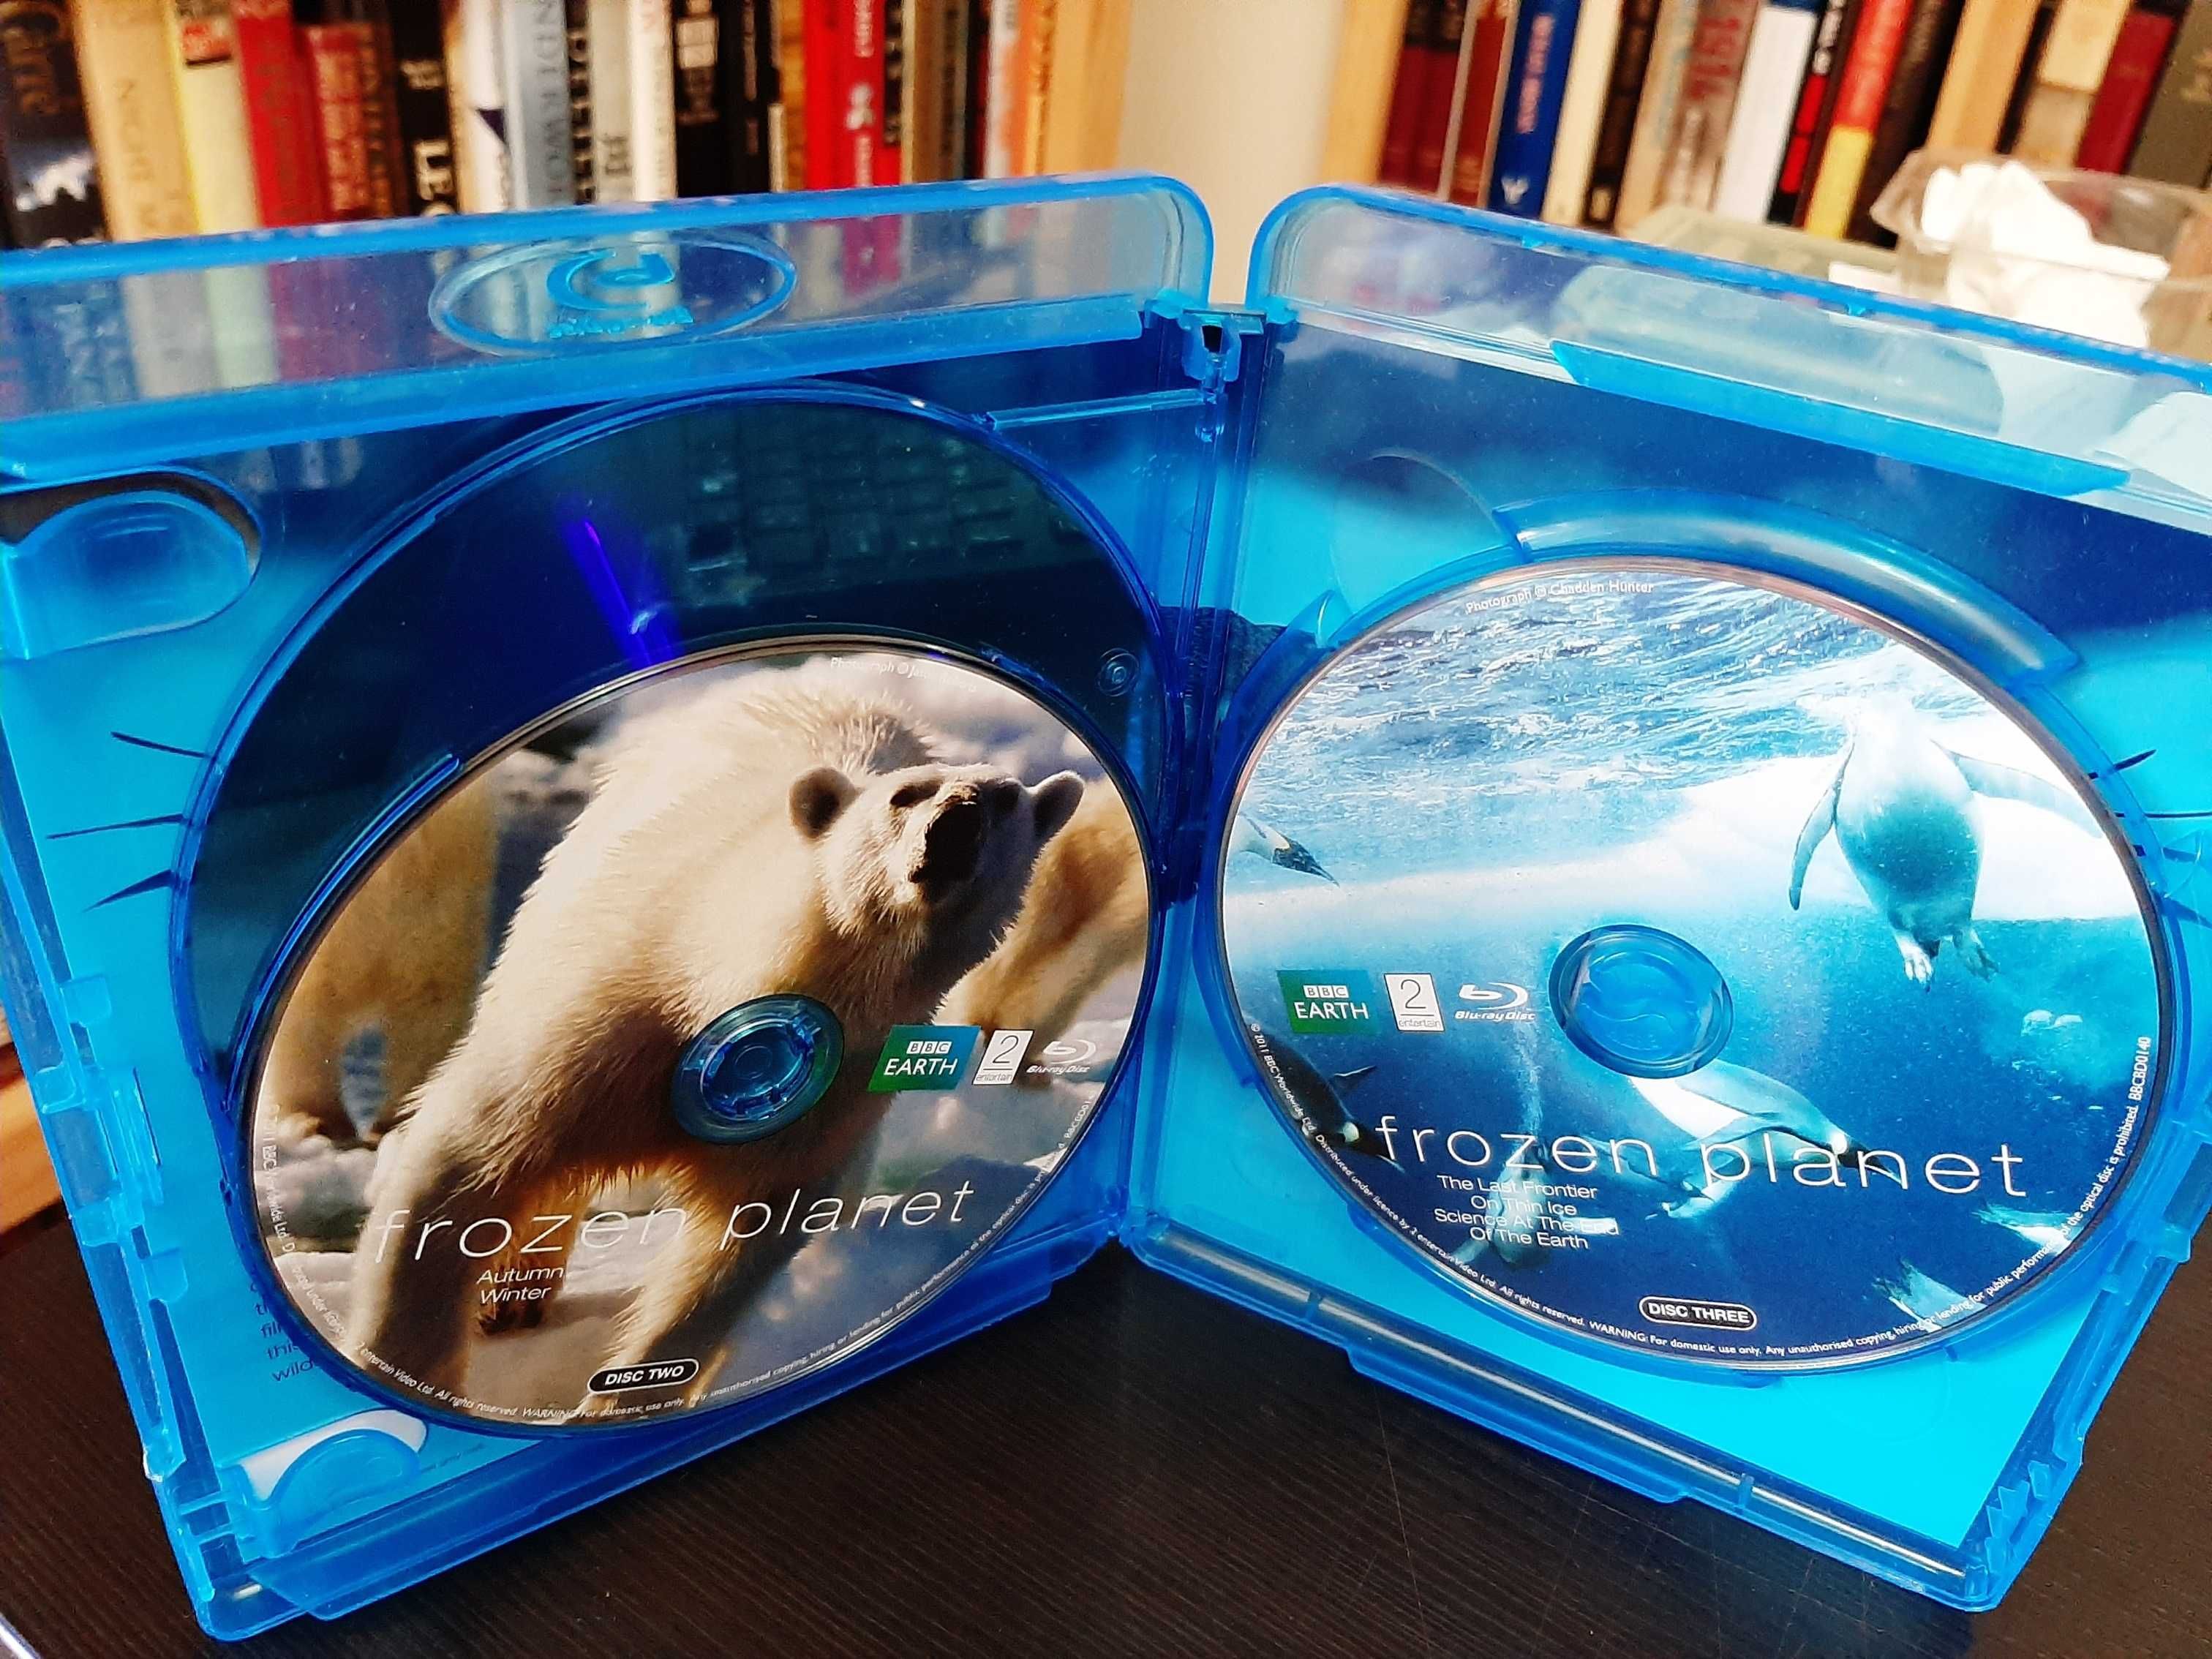 Frozen Planet: narrado por David Attenborough - BBC - 3 Discos Blu Ray